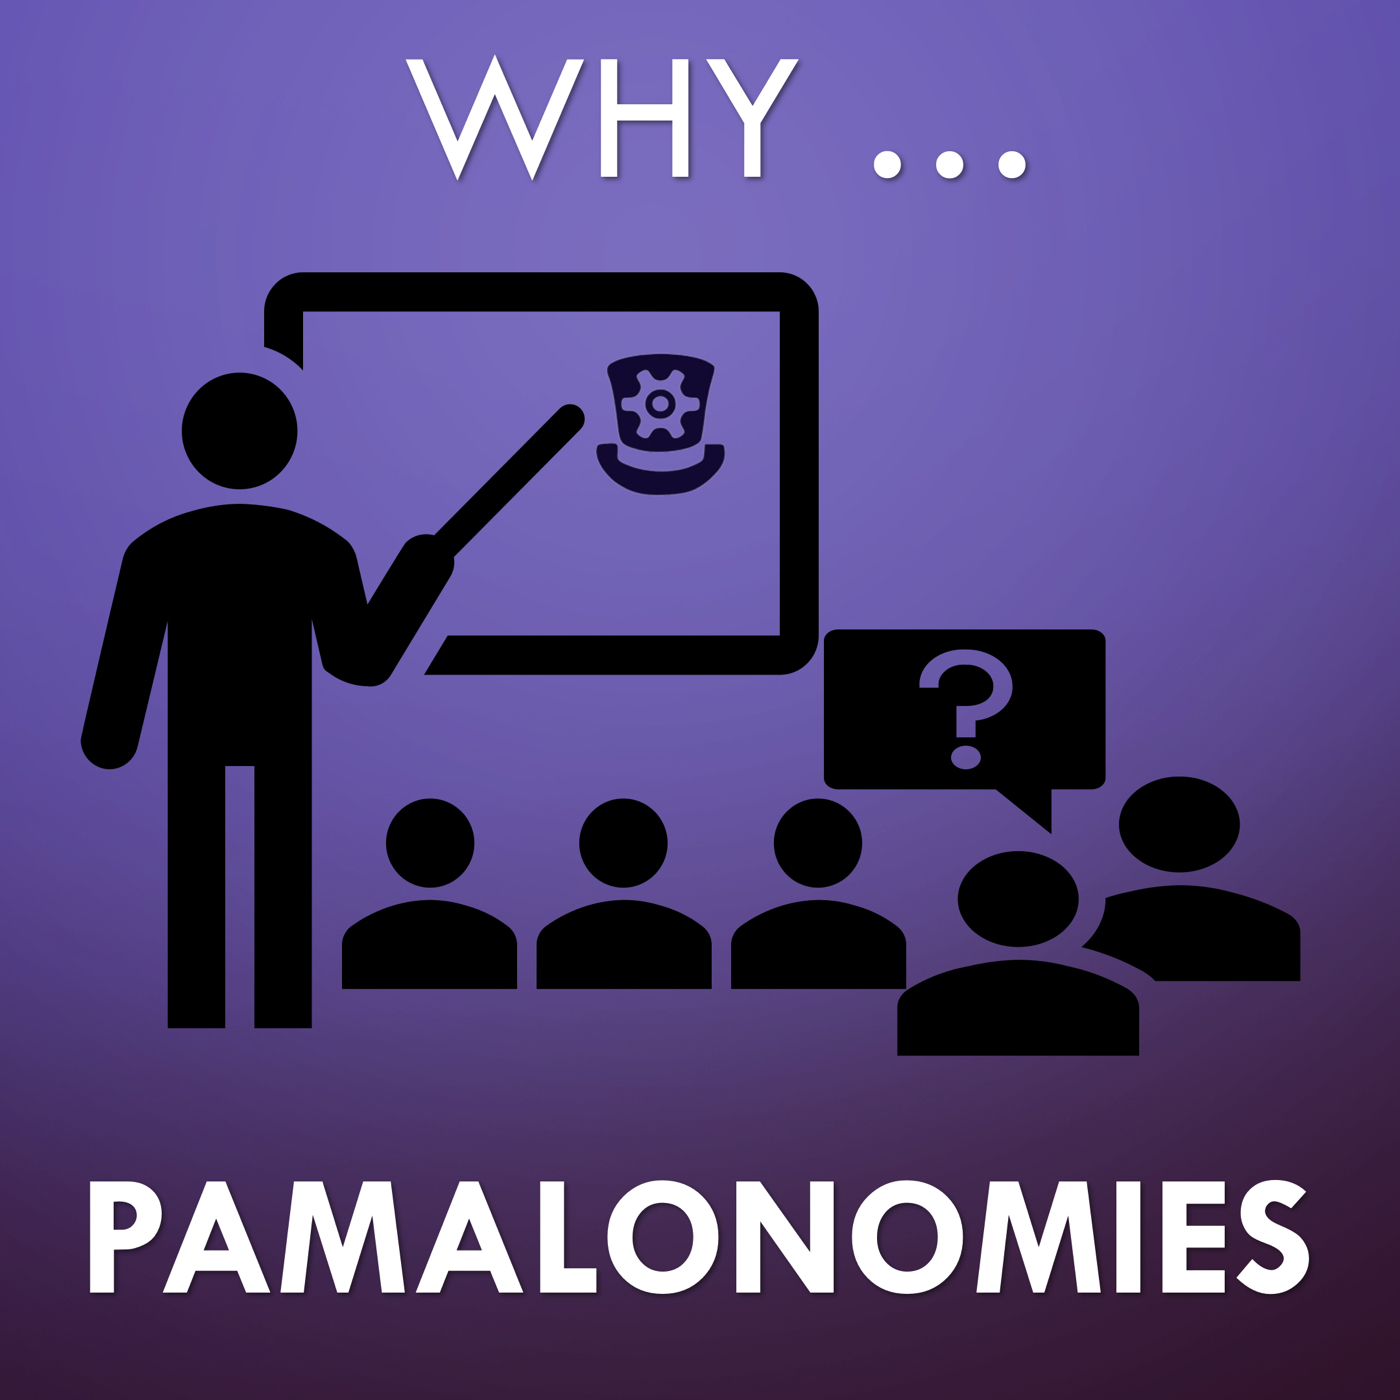 Why Pamalonomies